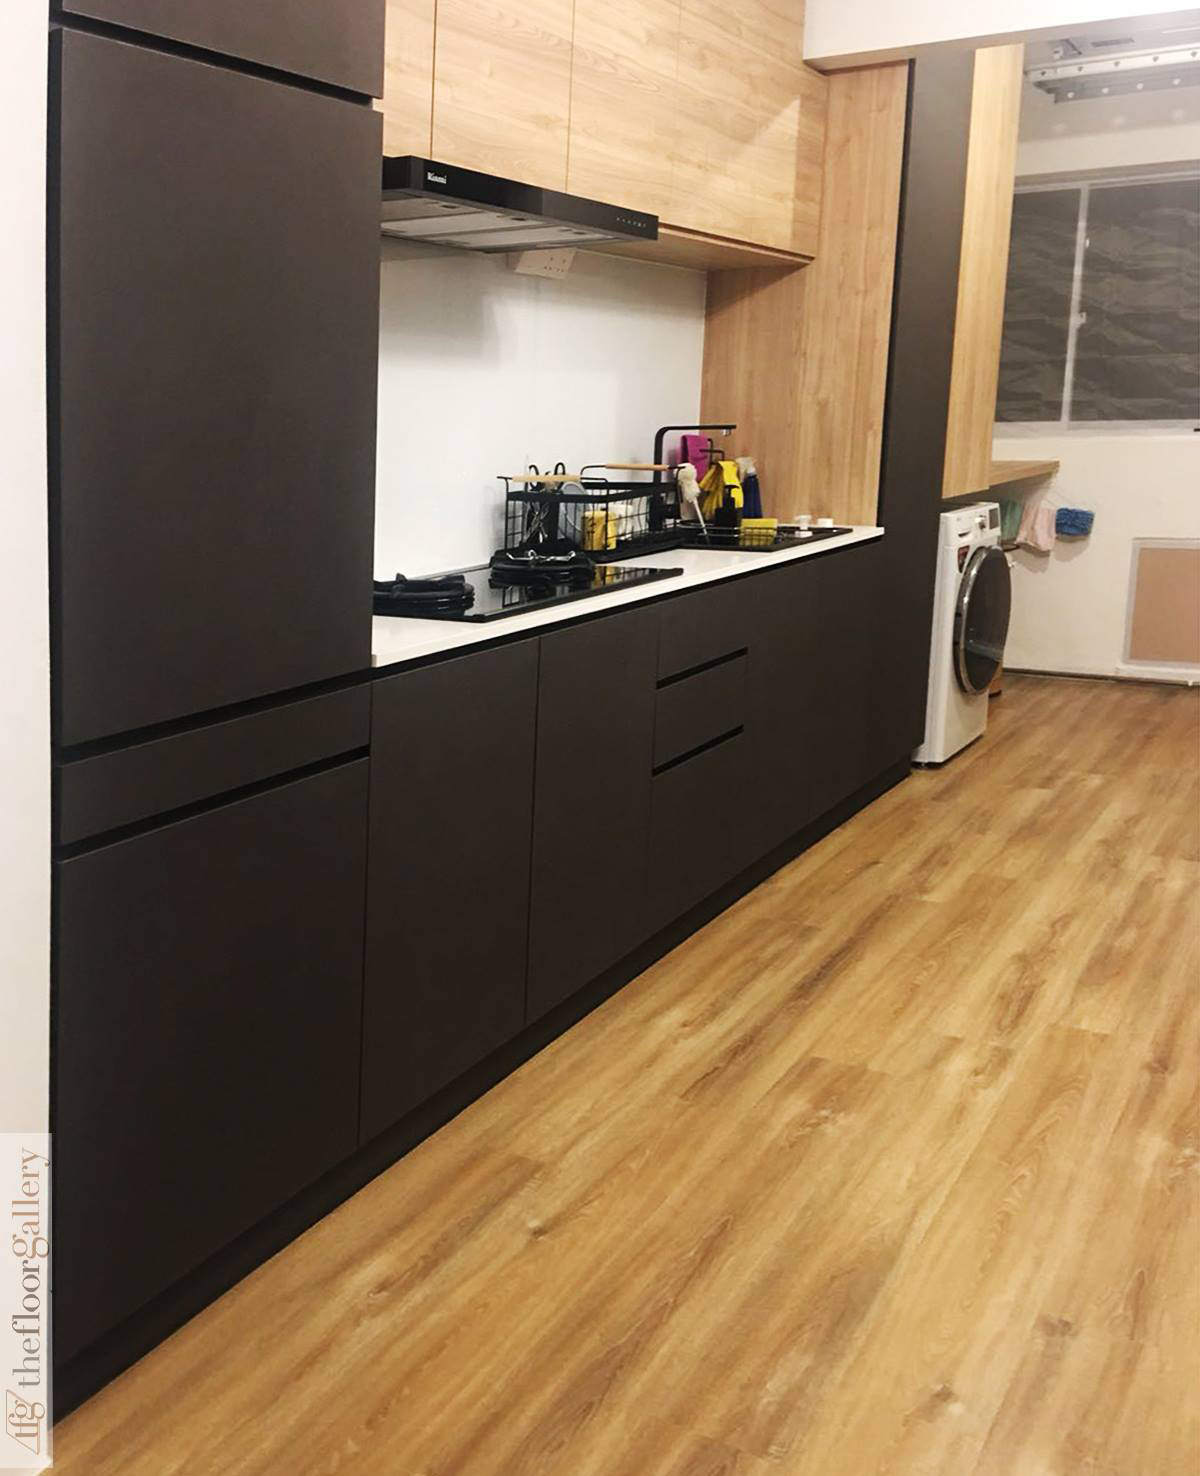 Top Kitchen Flooring Options In Singapore, Vinyl Flooring Kitchen Images